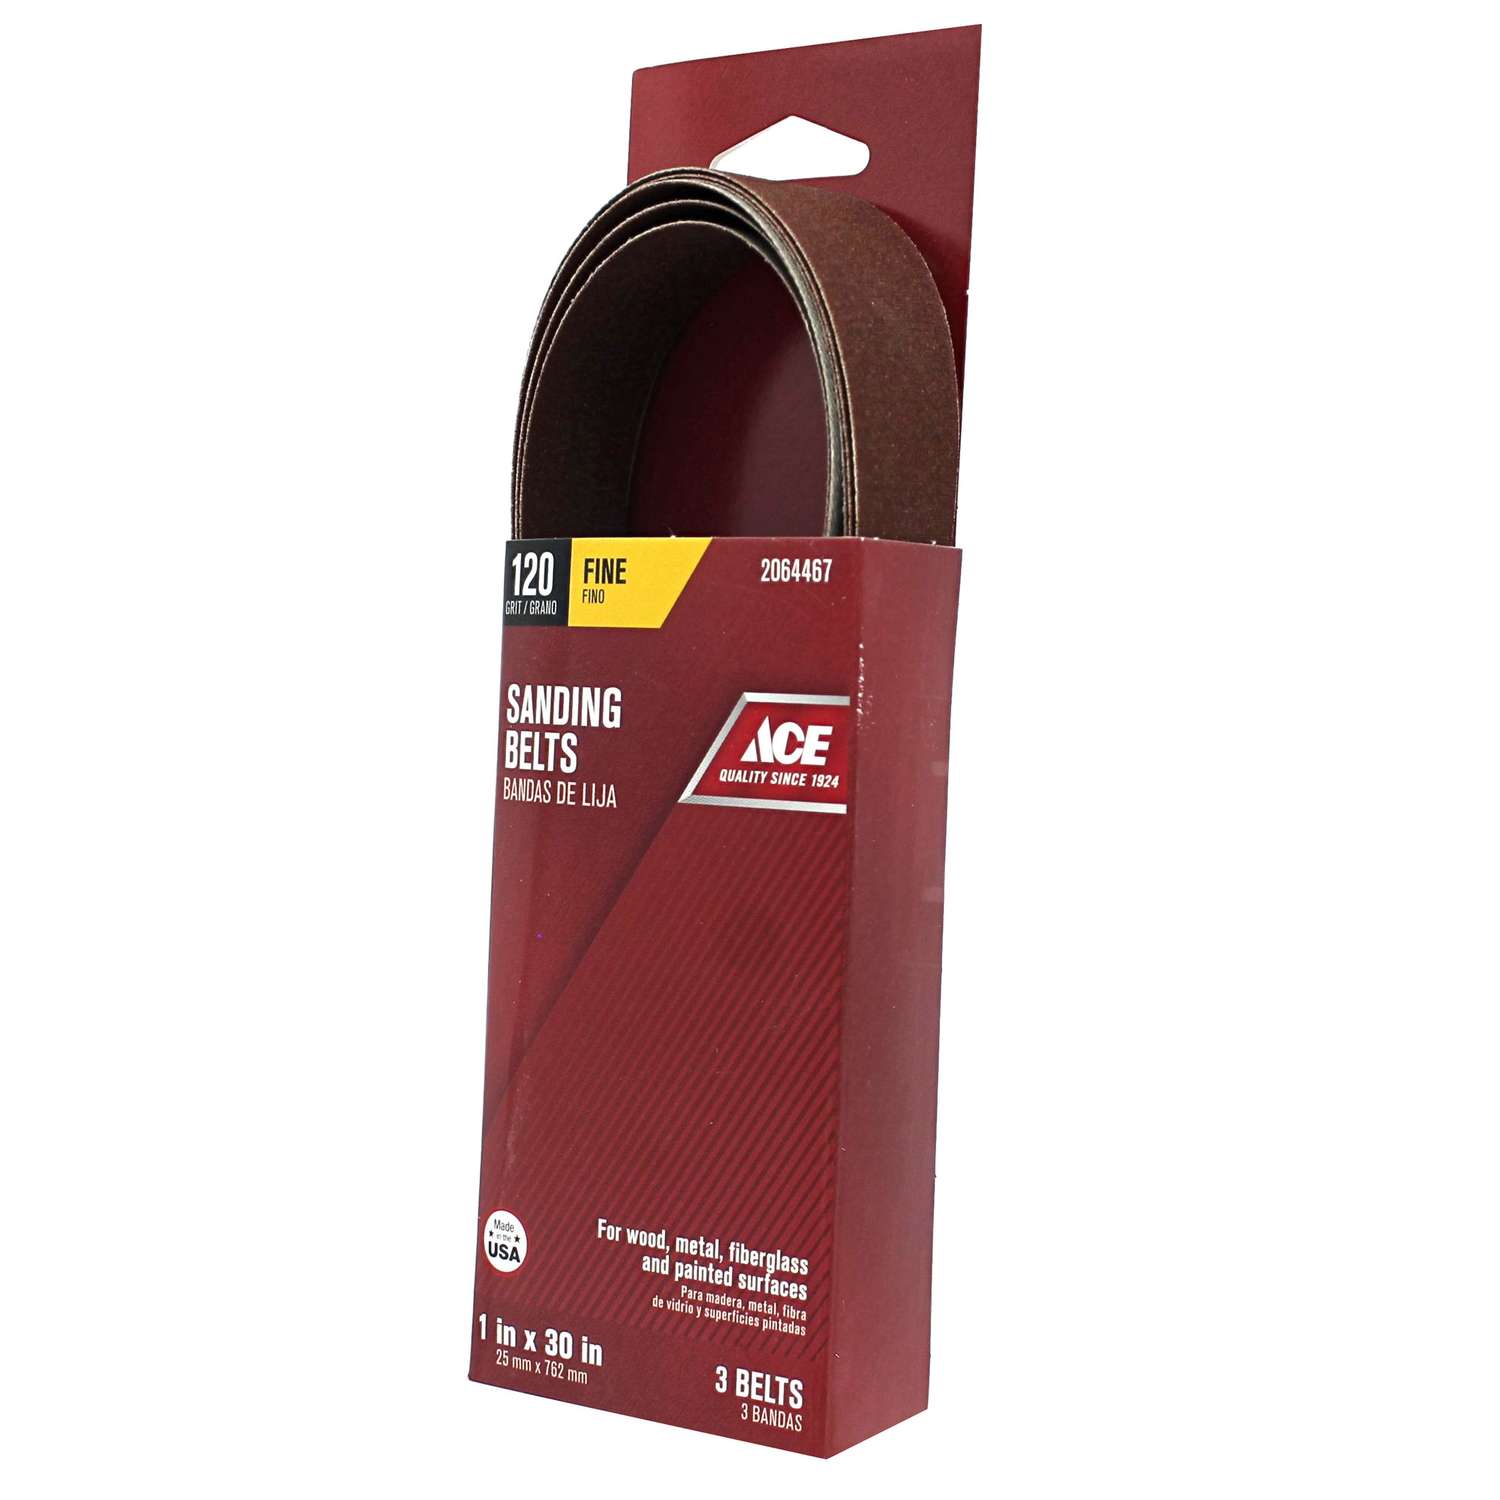 Details about   Ace 120 Grit Fine 1" x 30" inch Sanding Belts *3 Belts in 1 Package* 2064467 